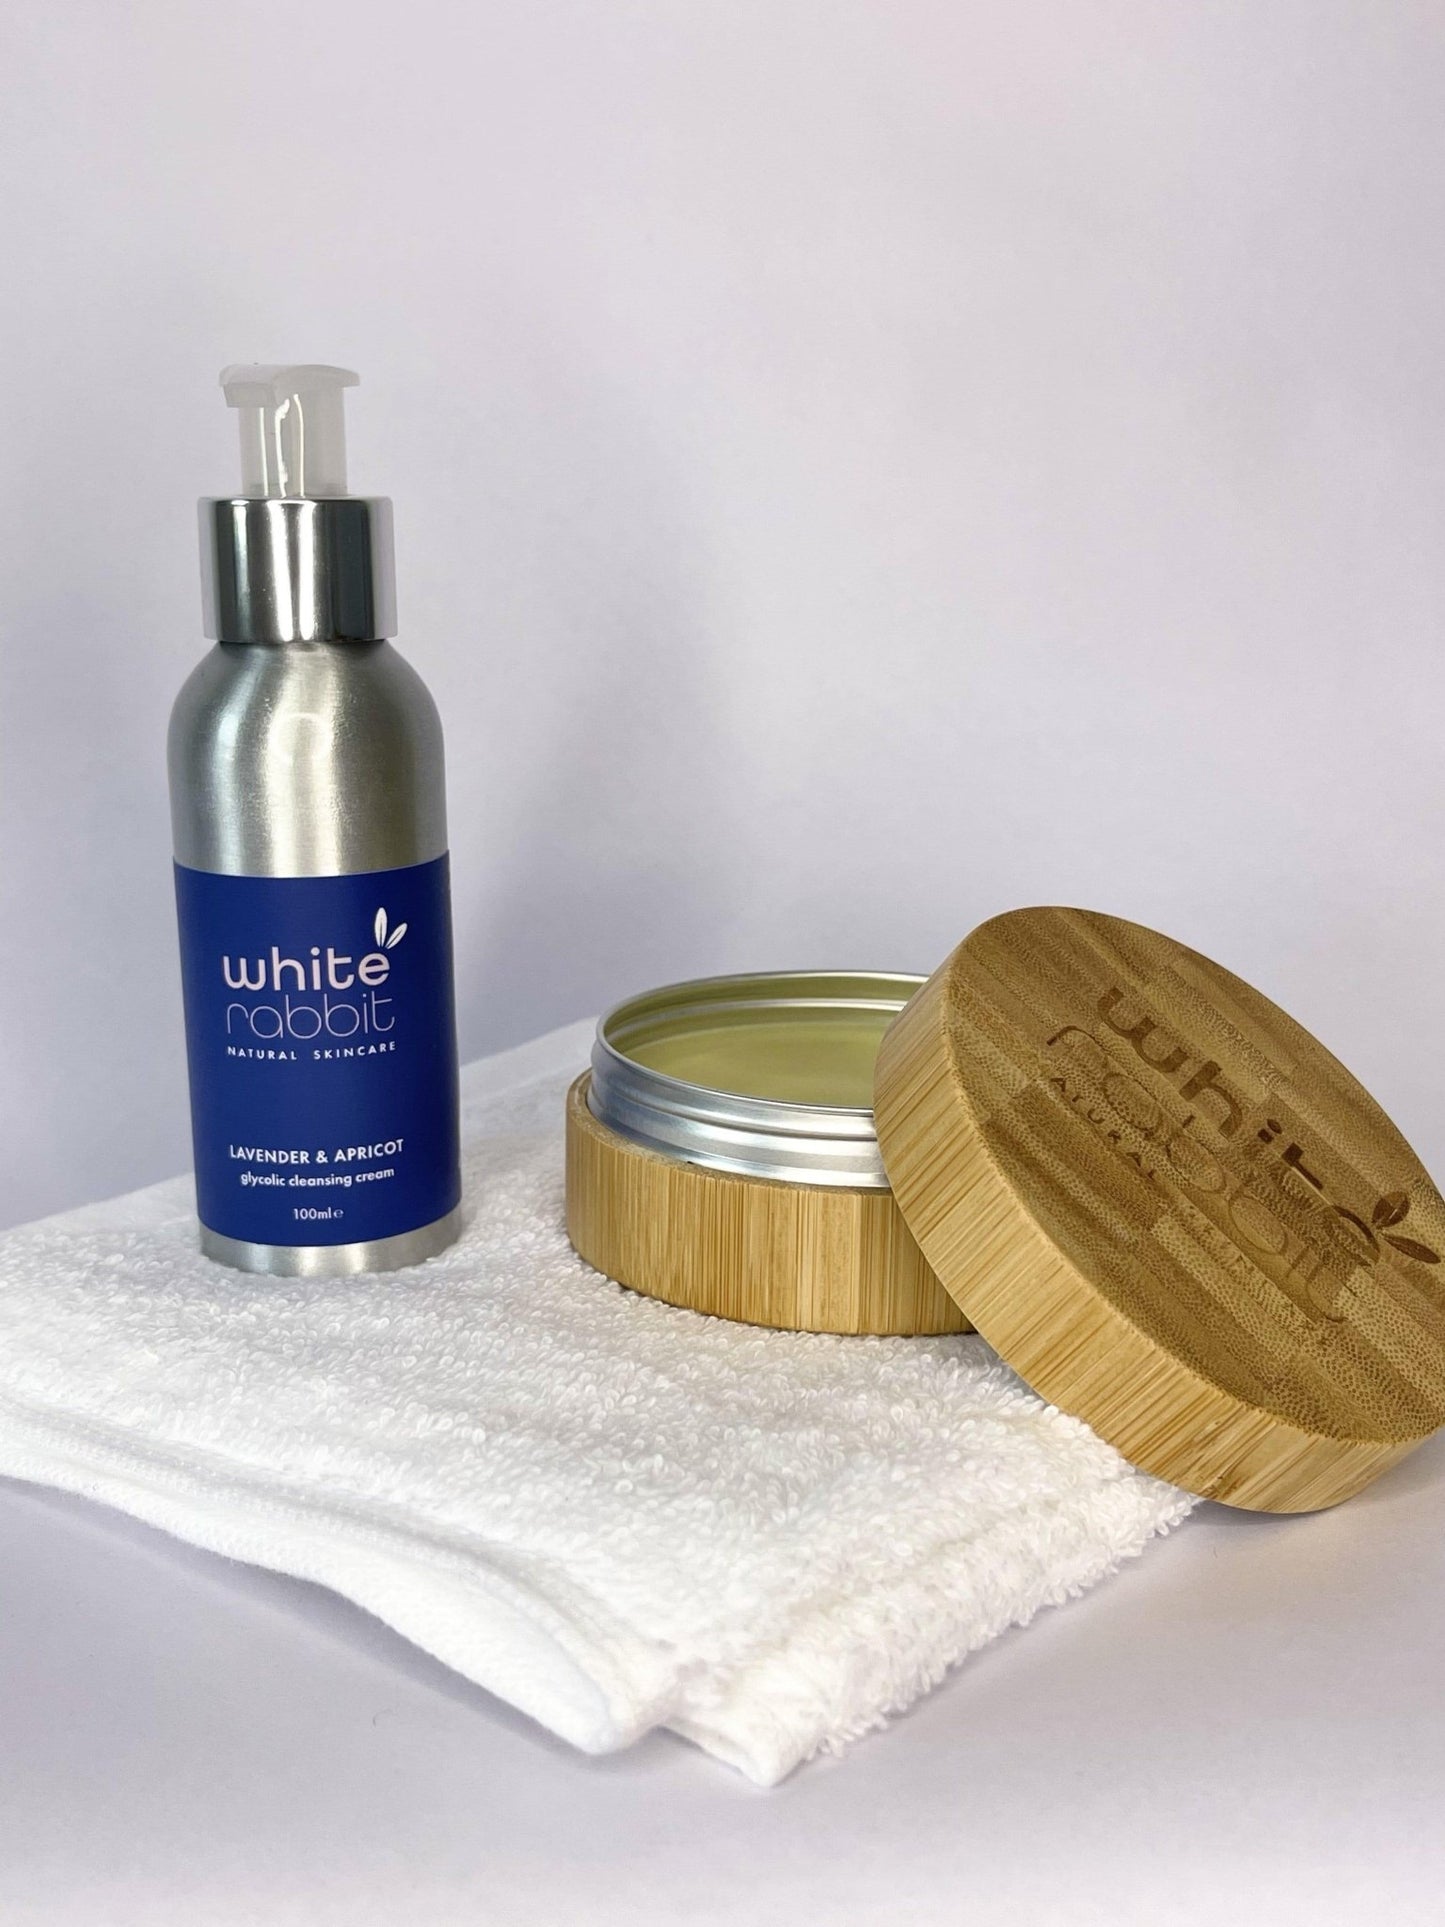 Naturally Exfoliating Skin Care Product Bundle - White Rabbit Skin Care